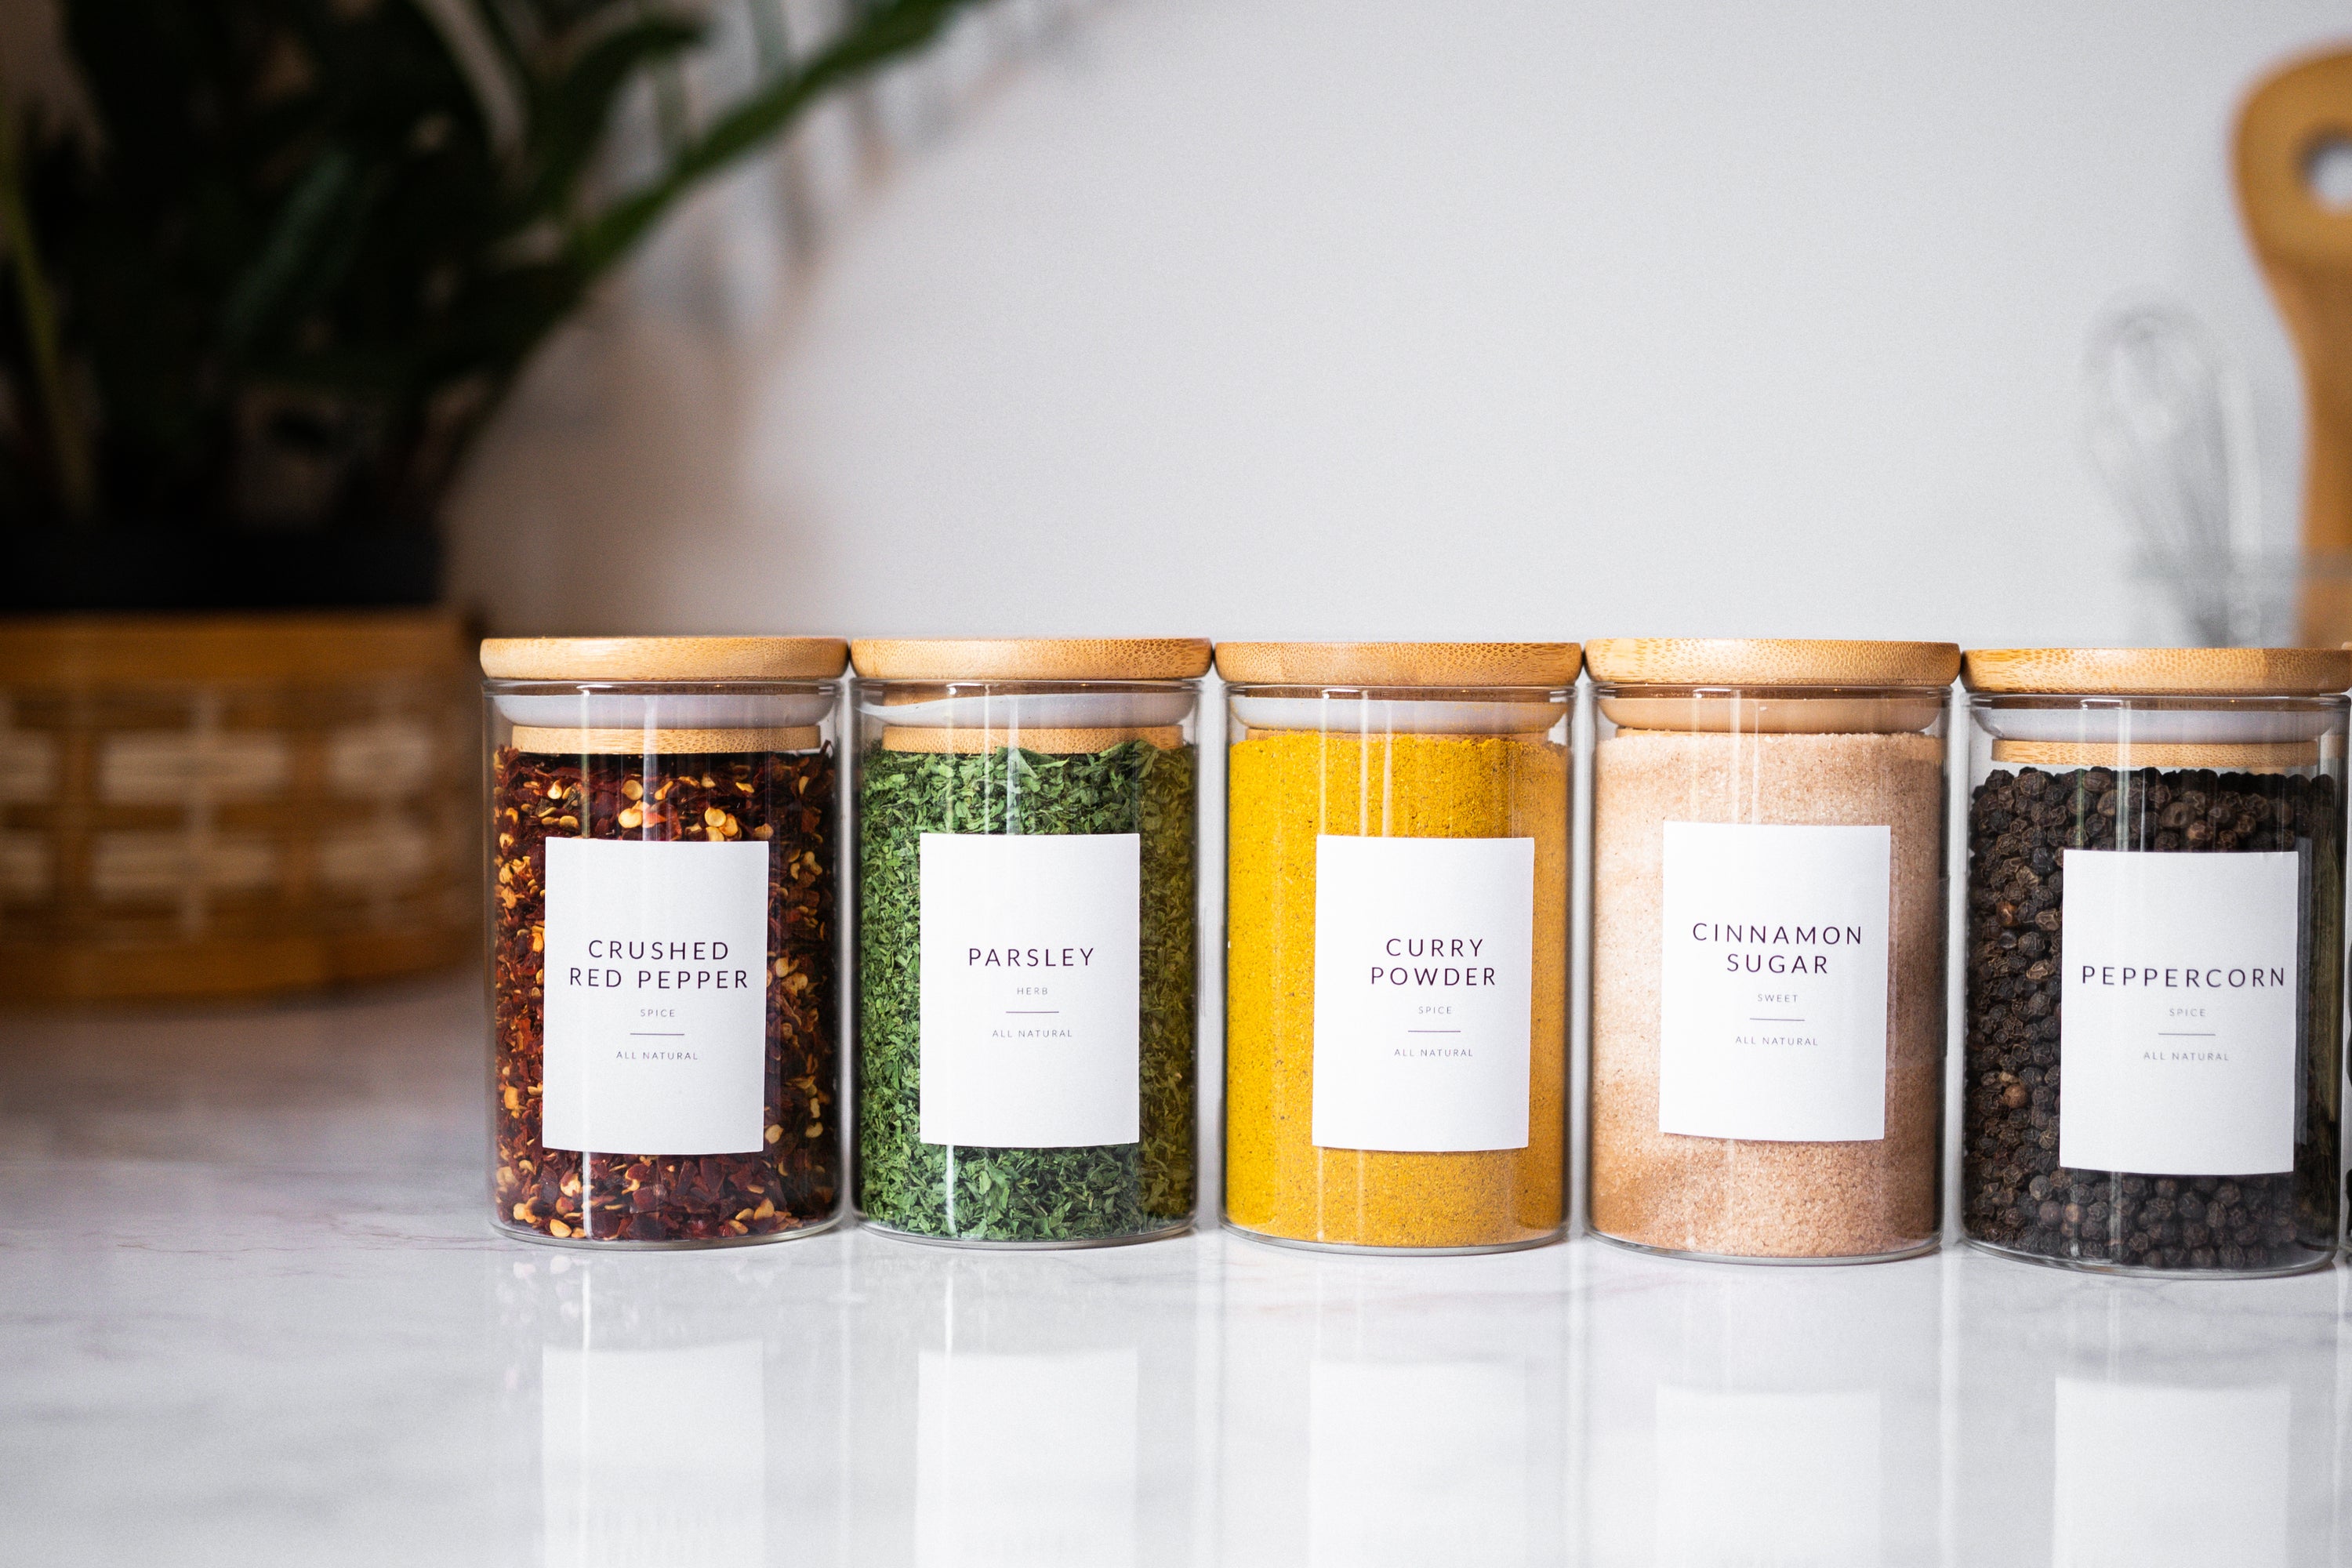 Minimalist spice jar labels for pinterest worthy pantry organization